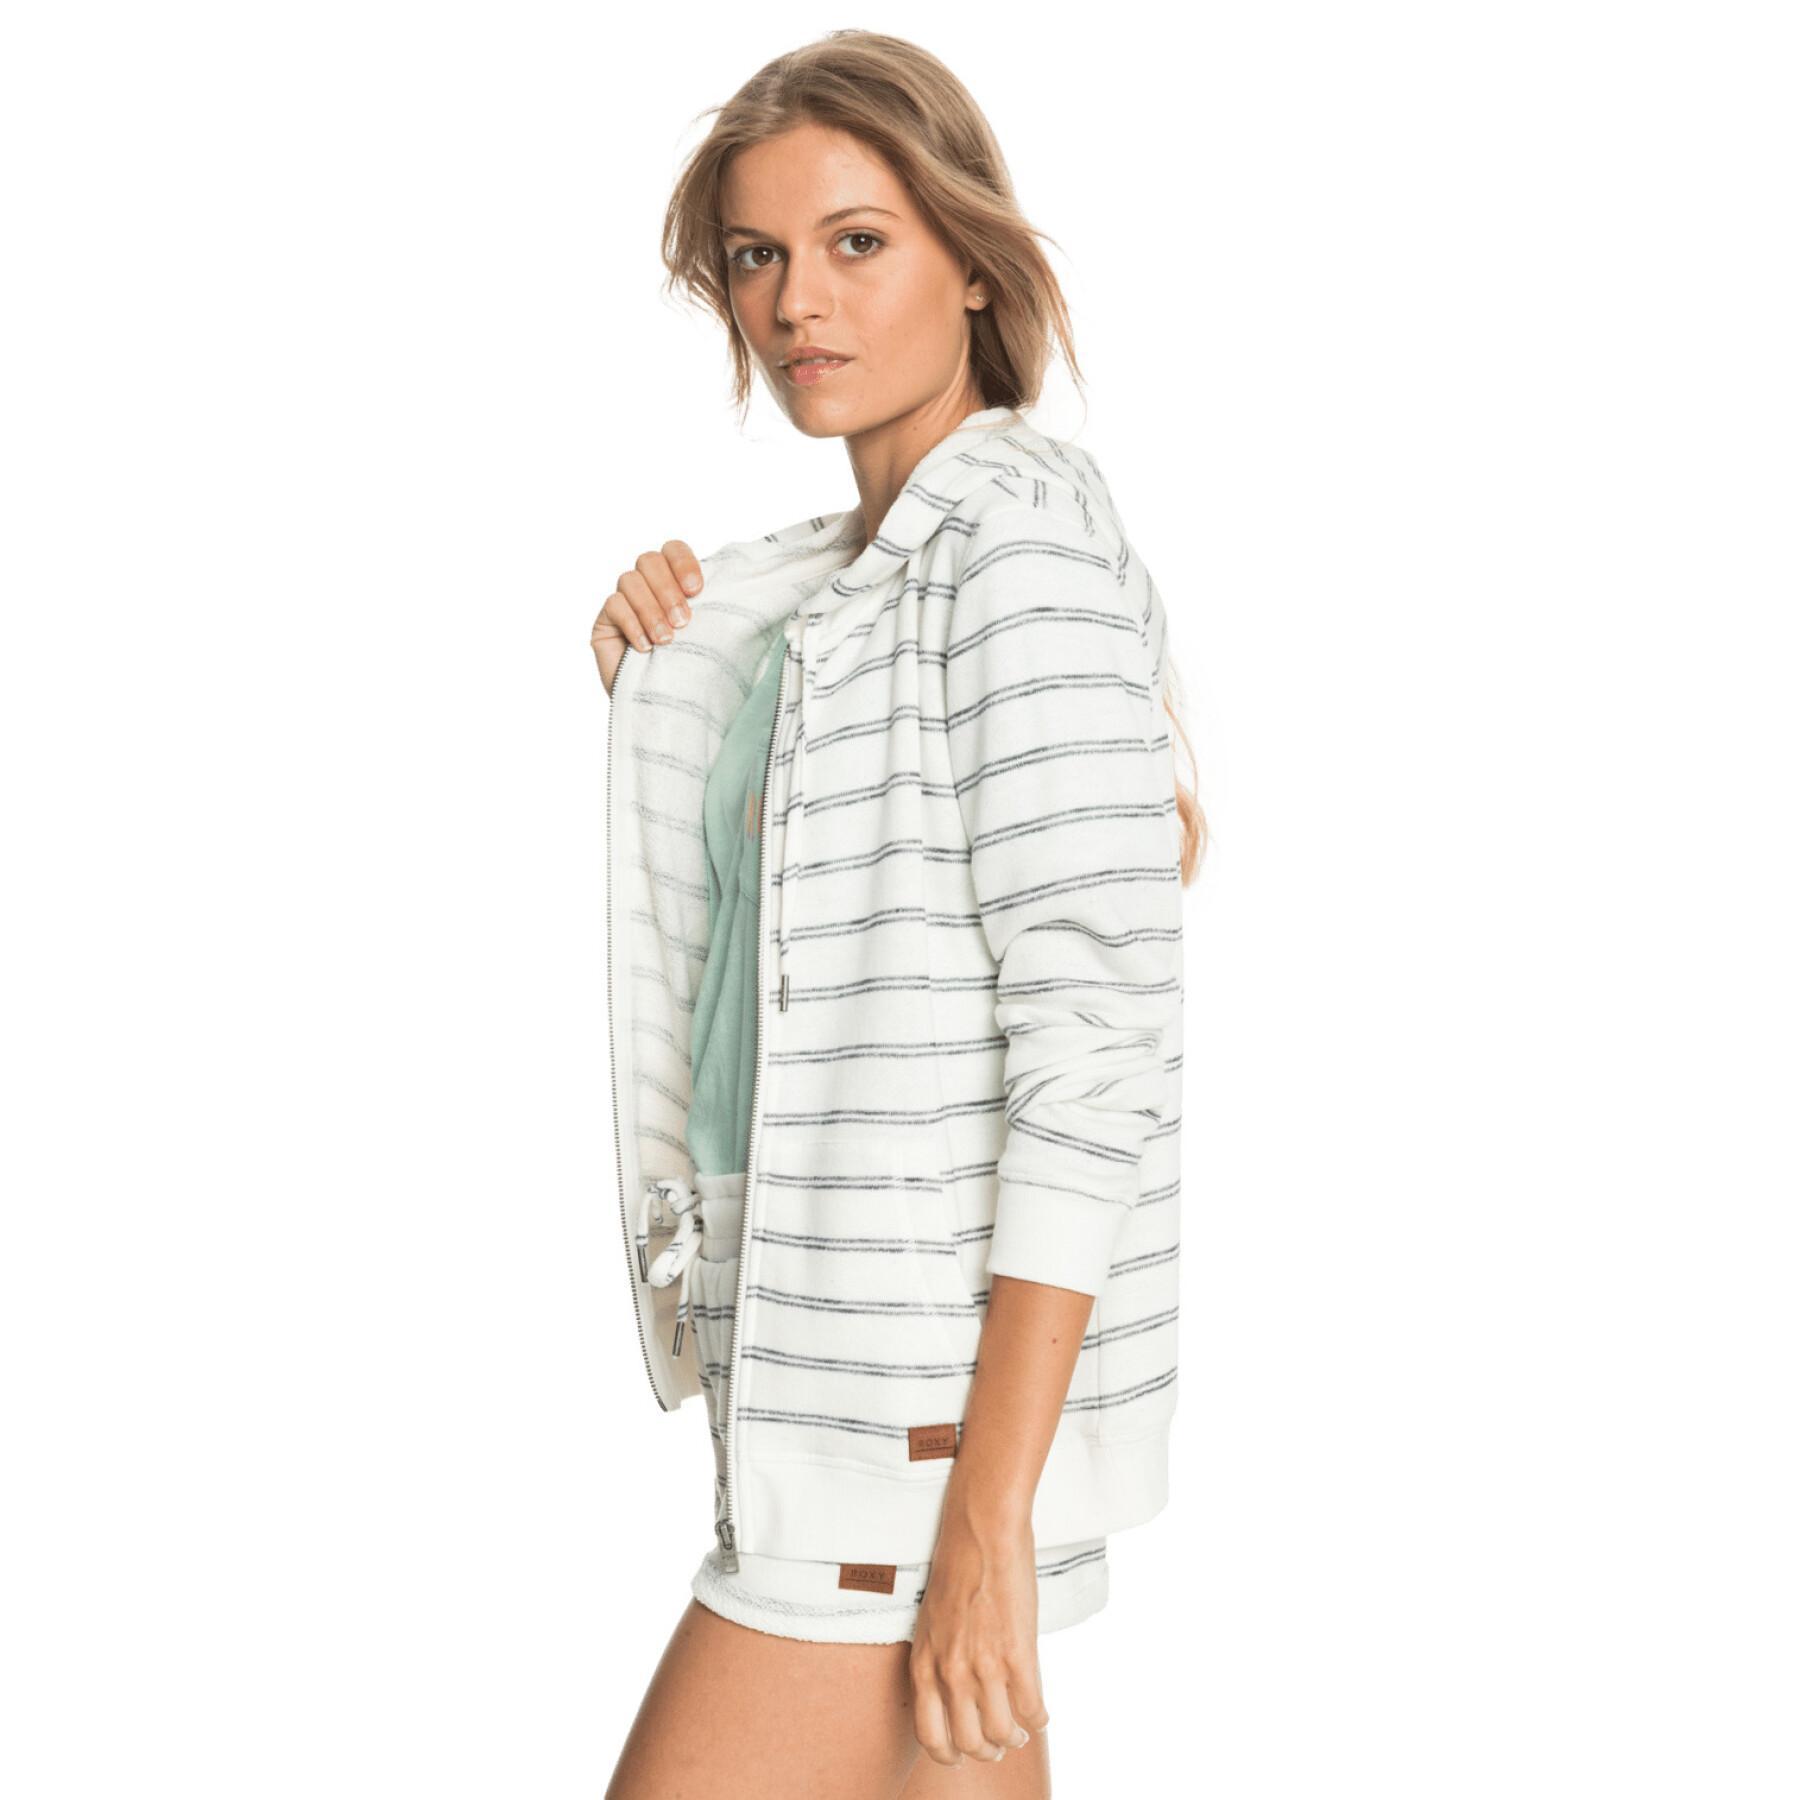 Women's striped hoodie Roxy Perfect Wave